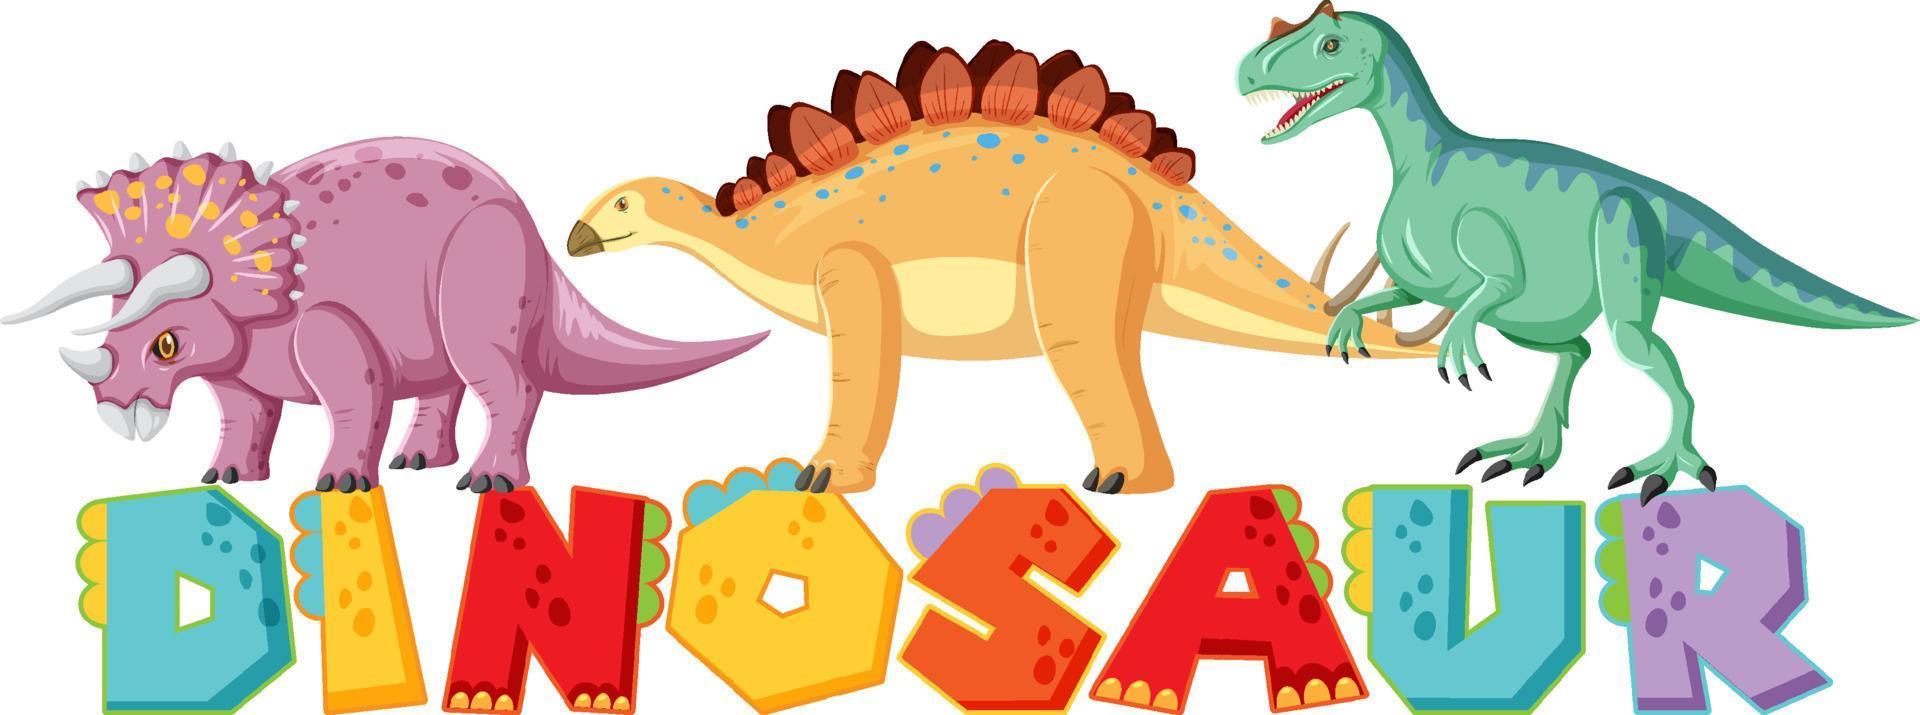 Font design for word dinosaur vector